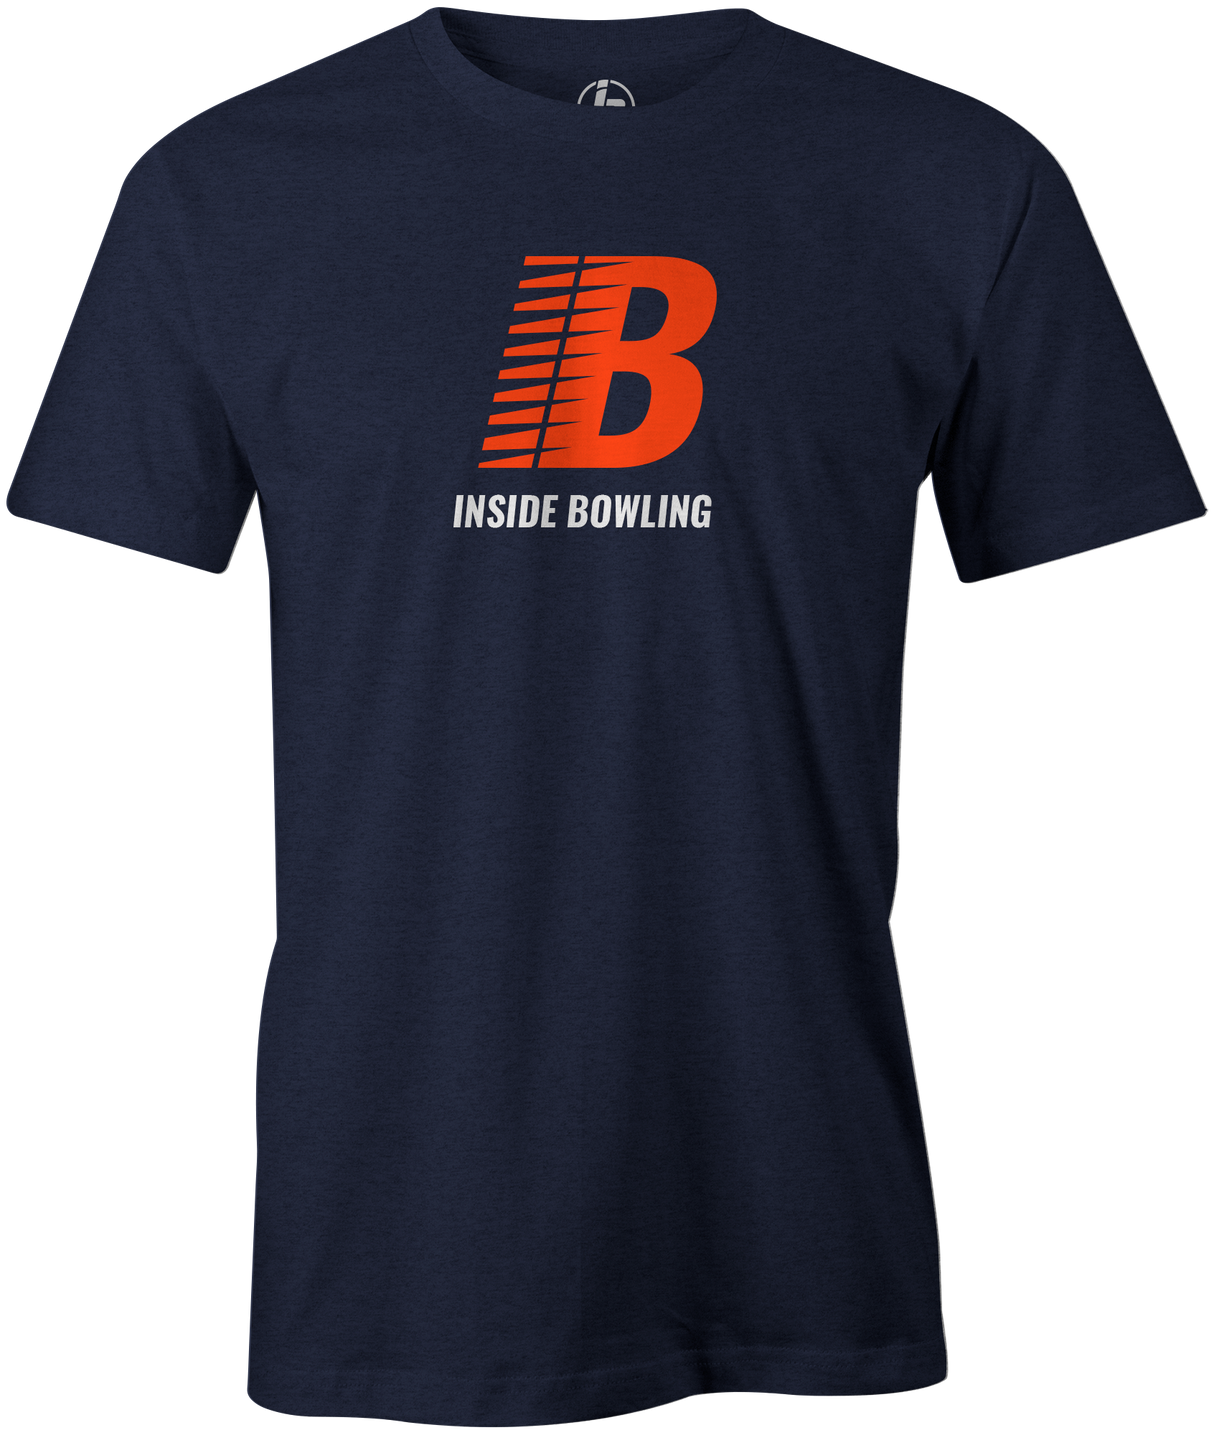 Inside Balance Men's T-shirt, Navy, Tshirt, tee, tee-shirt, tee shirt, teeshirt, cool, New Balance, bowling